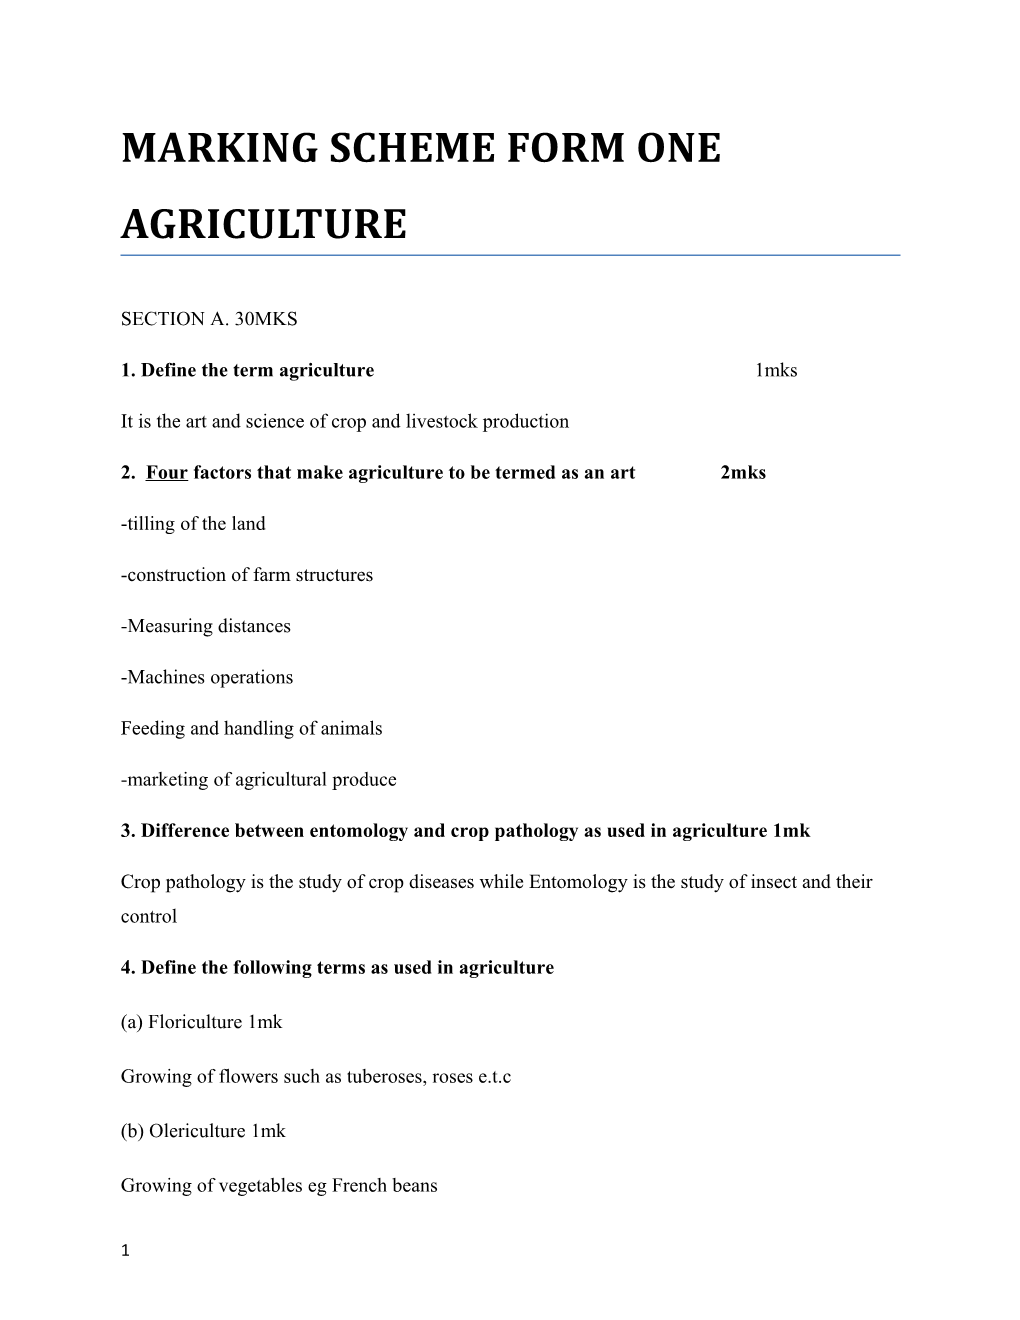 Marking Scheme Form One Agriculture